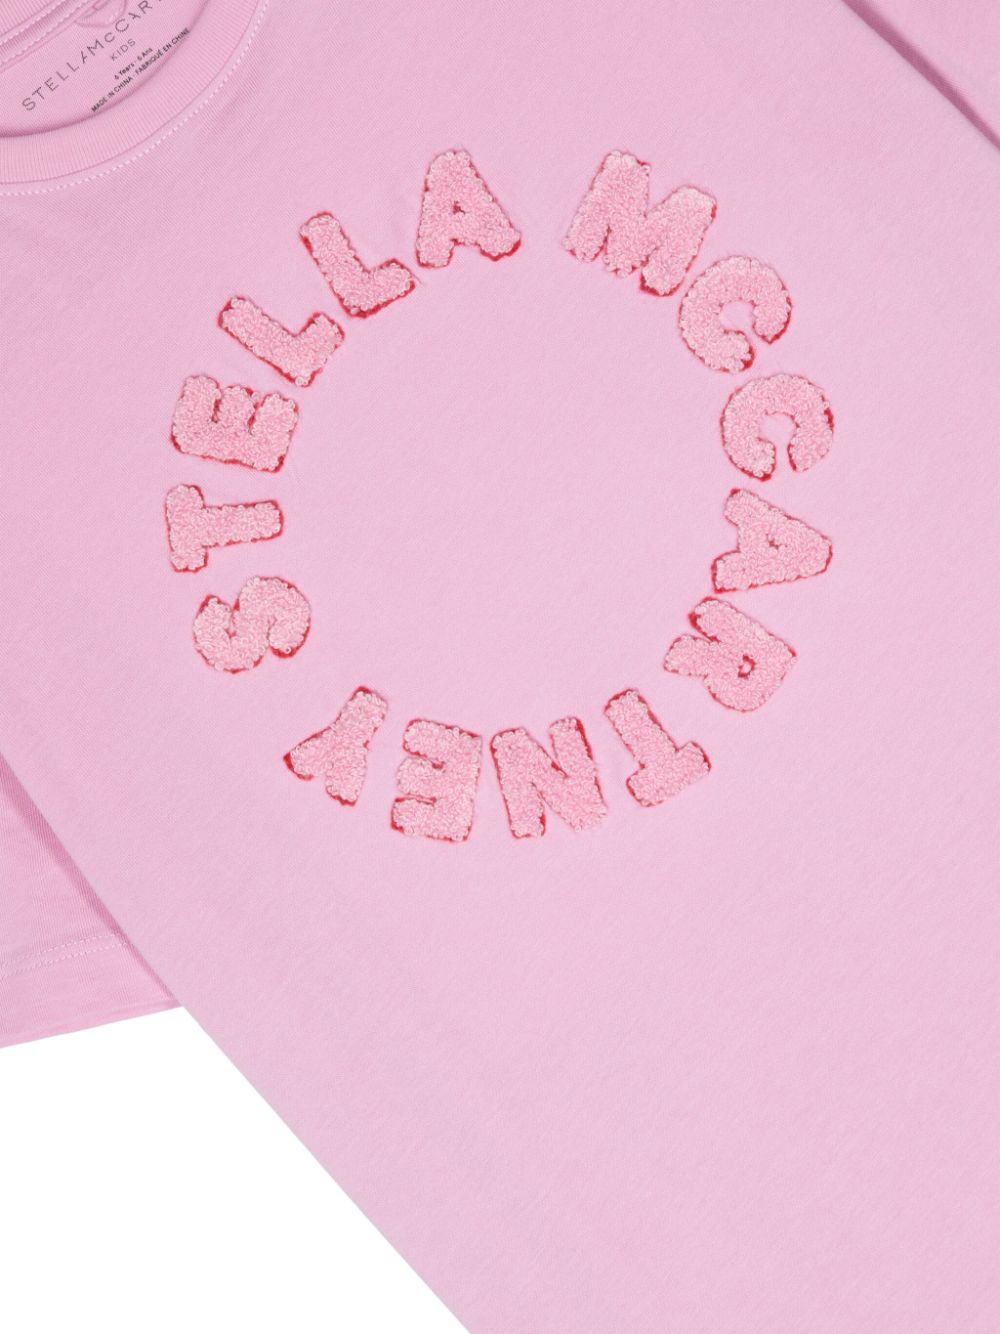 t-shirt fille rose